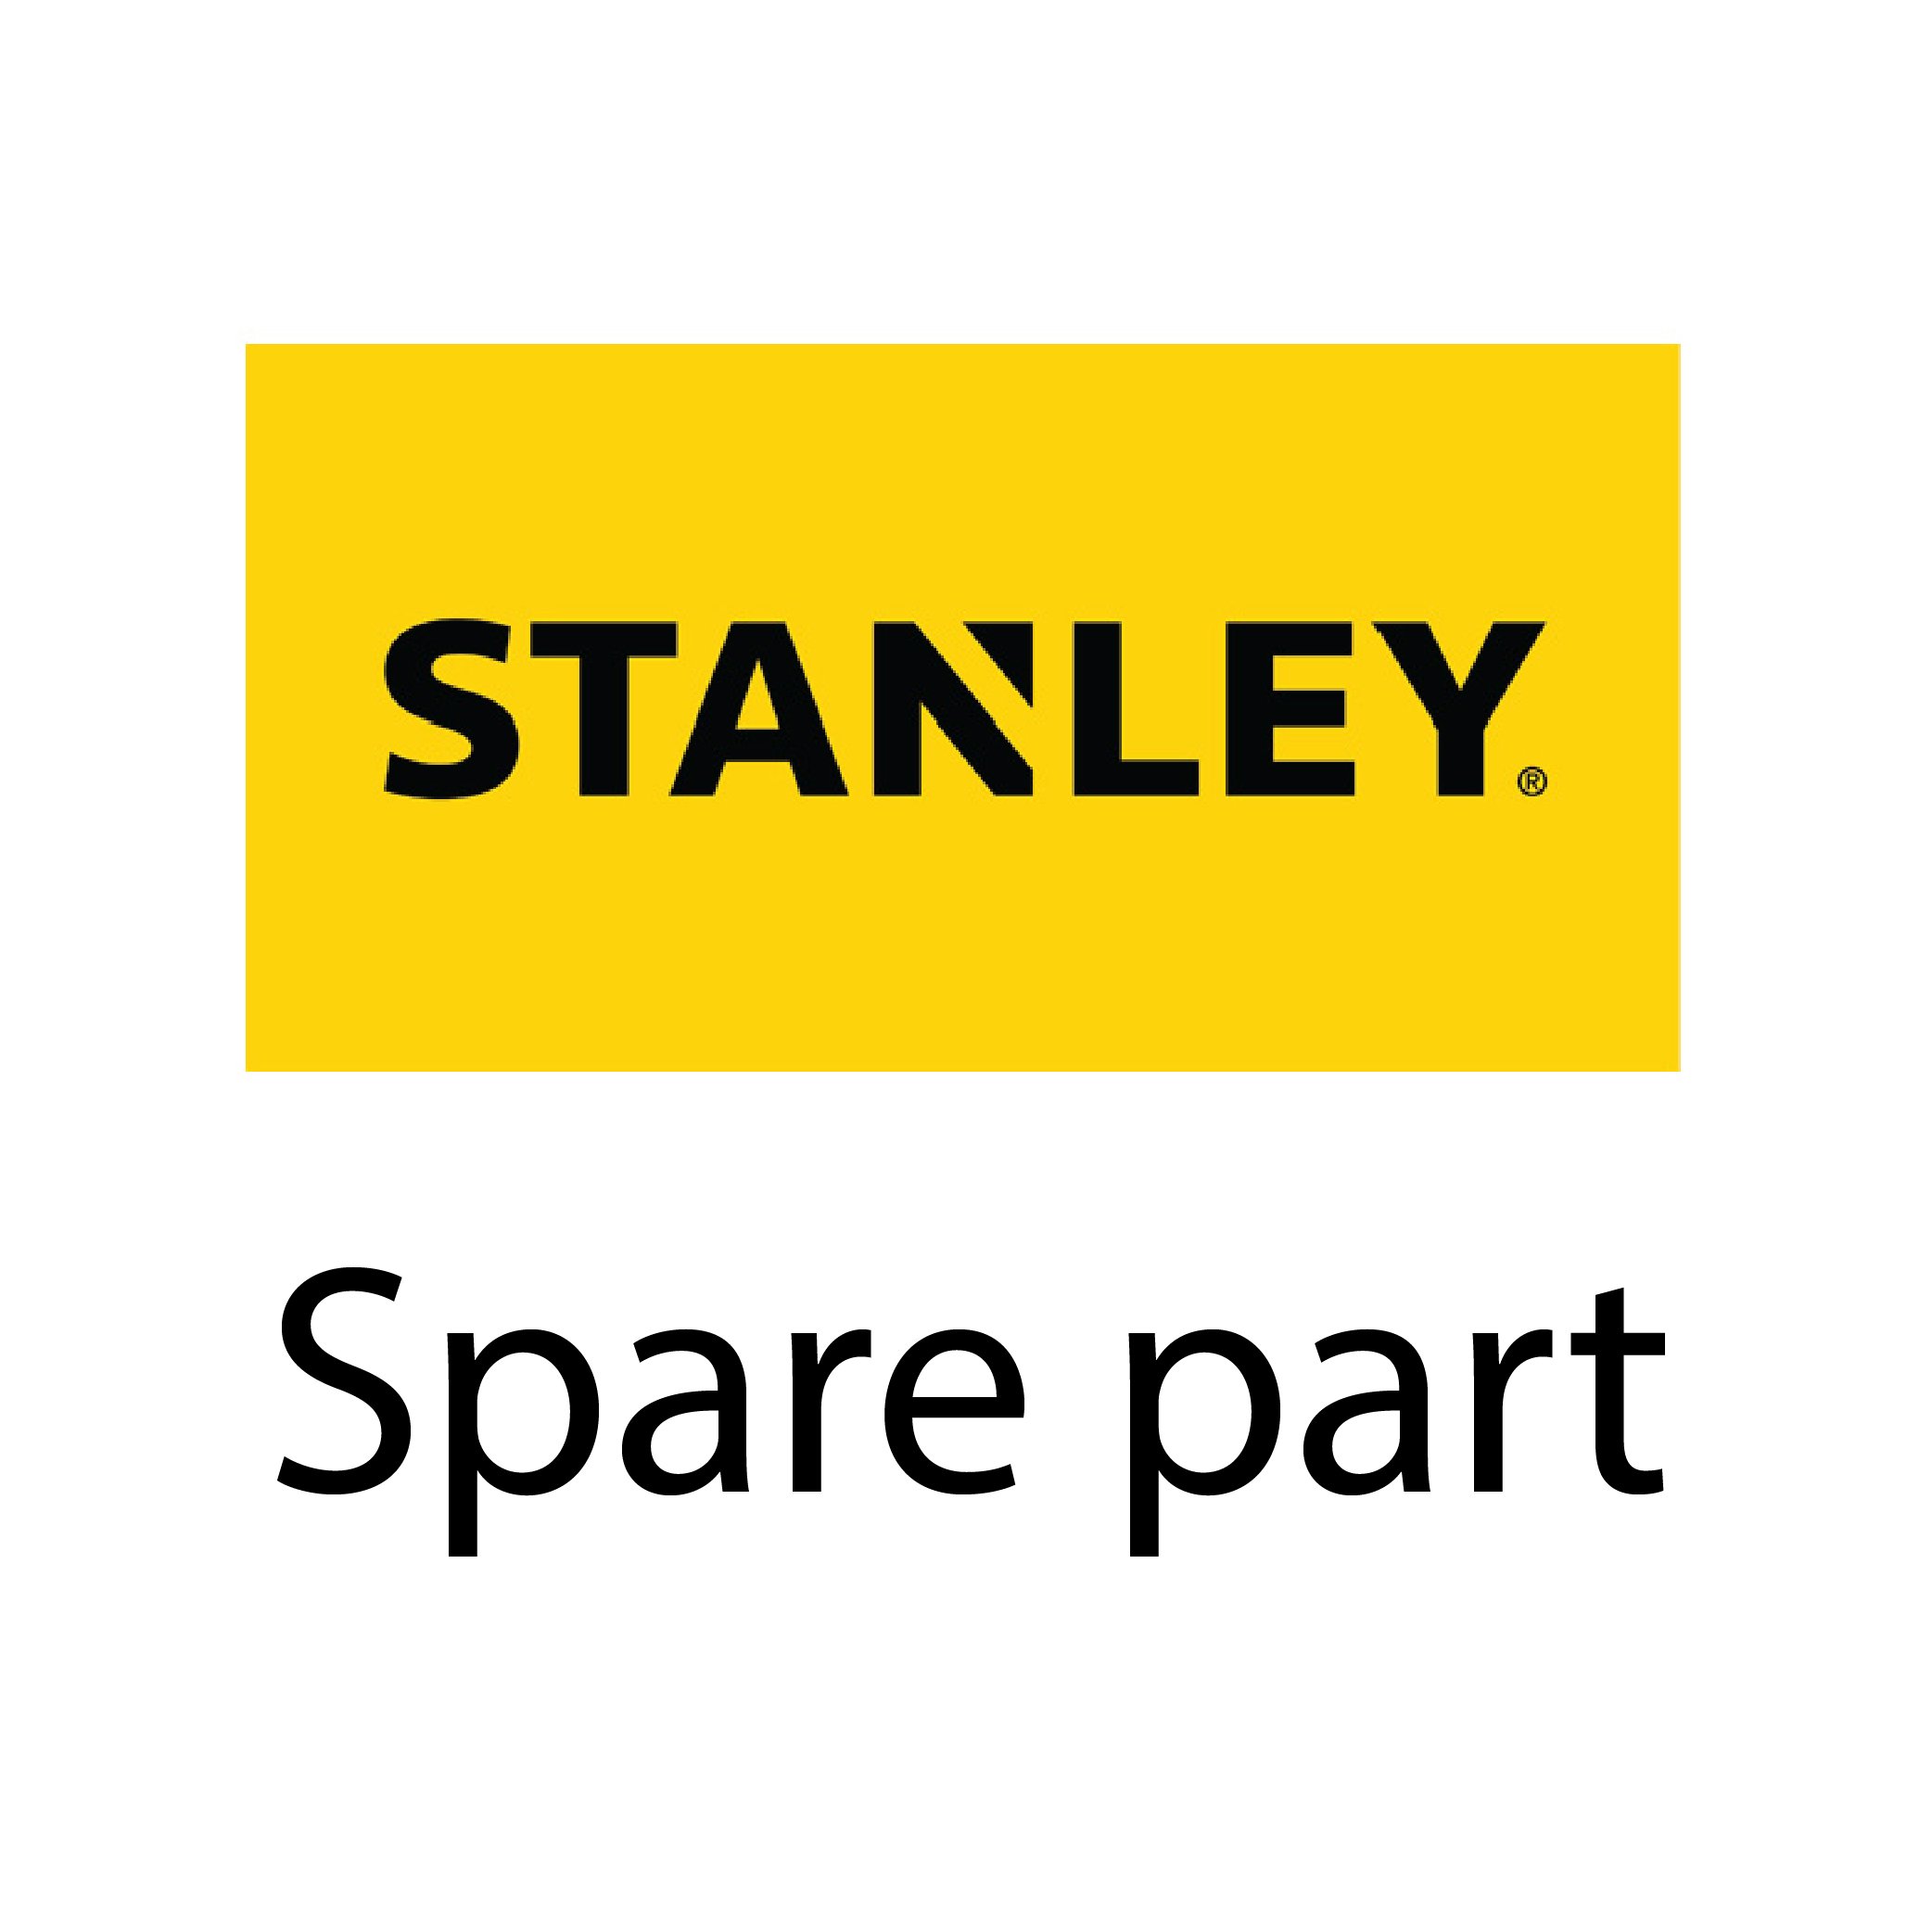 SKI - สกี จำหน่ายสินค้าหลากหลาย และคุณภาพดี | STANLEY #10045225-26 ทุ่น STEL805